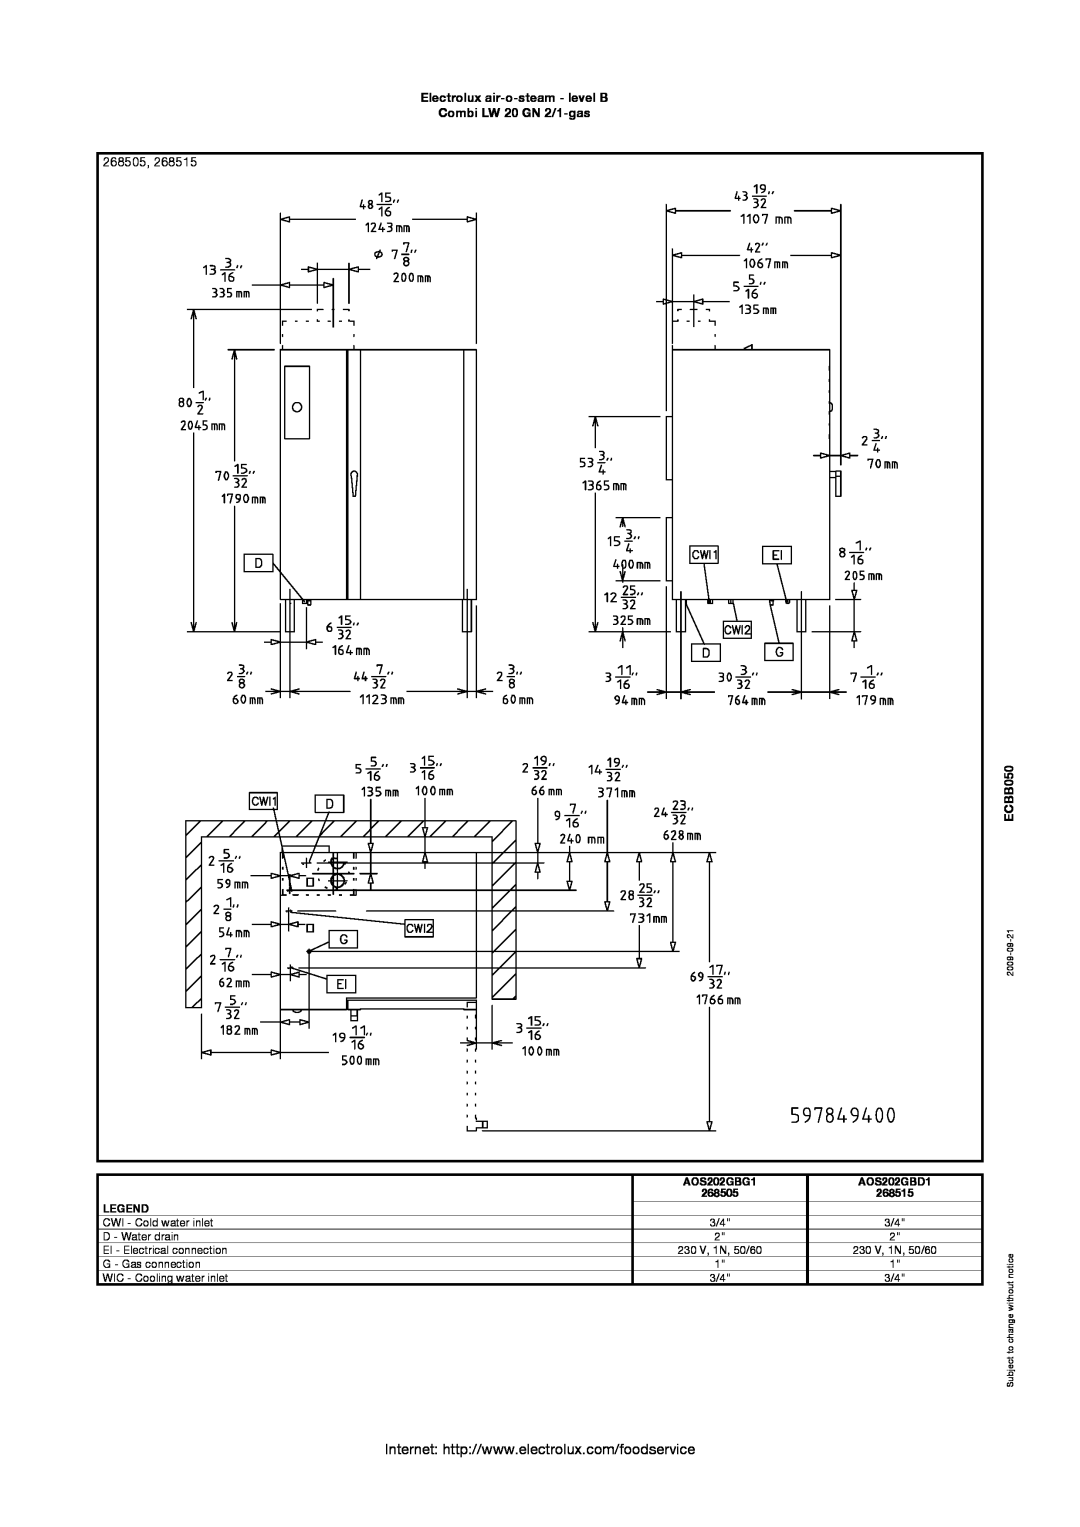 Electrolux AOS202GBD1 manual 268505, Electrolux air-o-steam - level B Combi LW 20 GN 2/1-gas, ECBB050, AOS202GBG1, 268515 